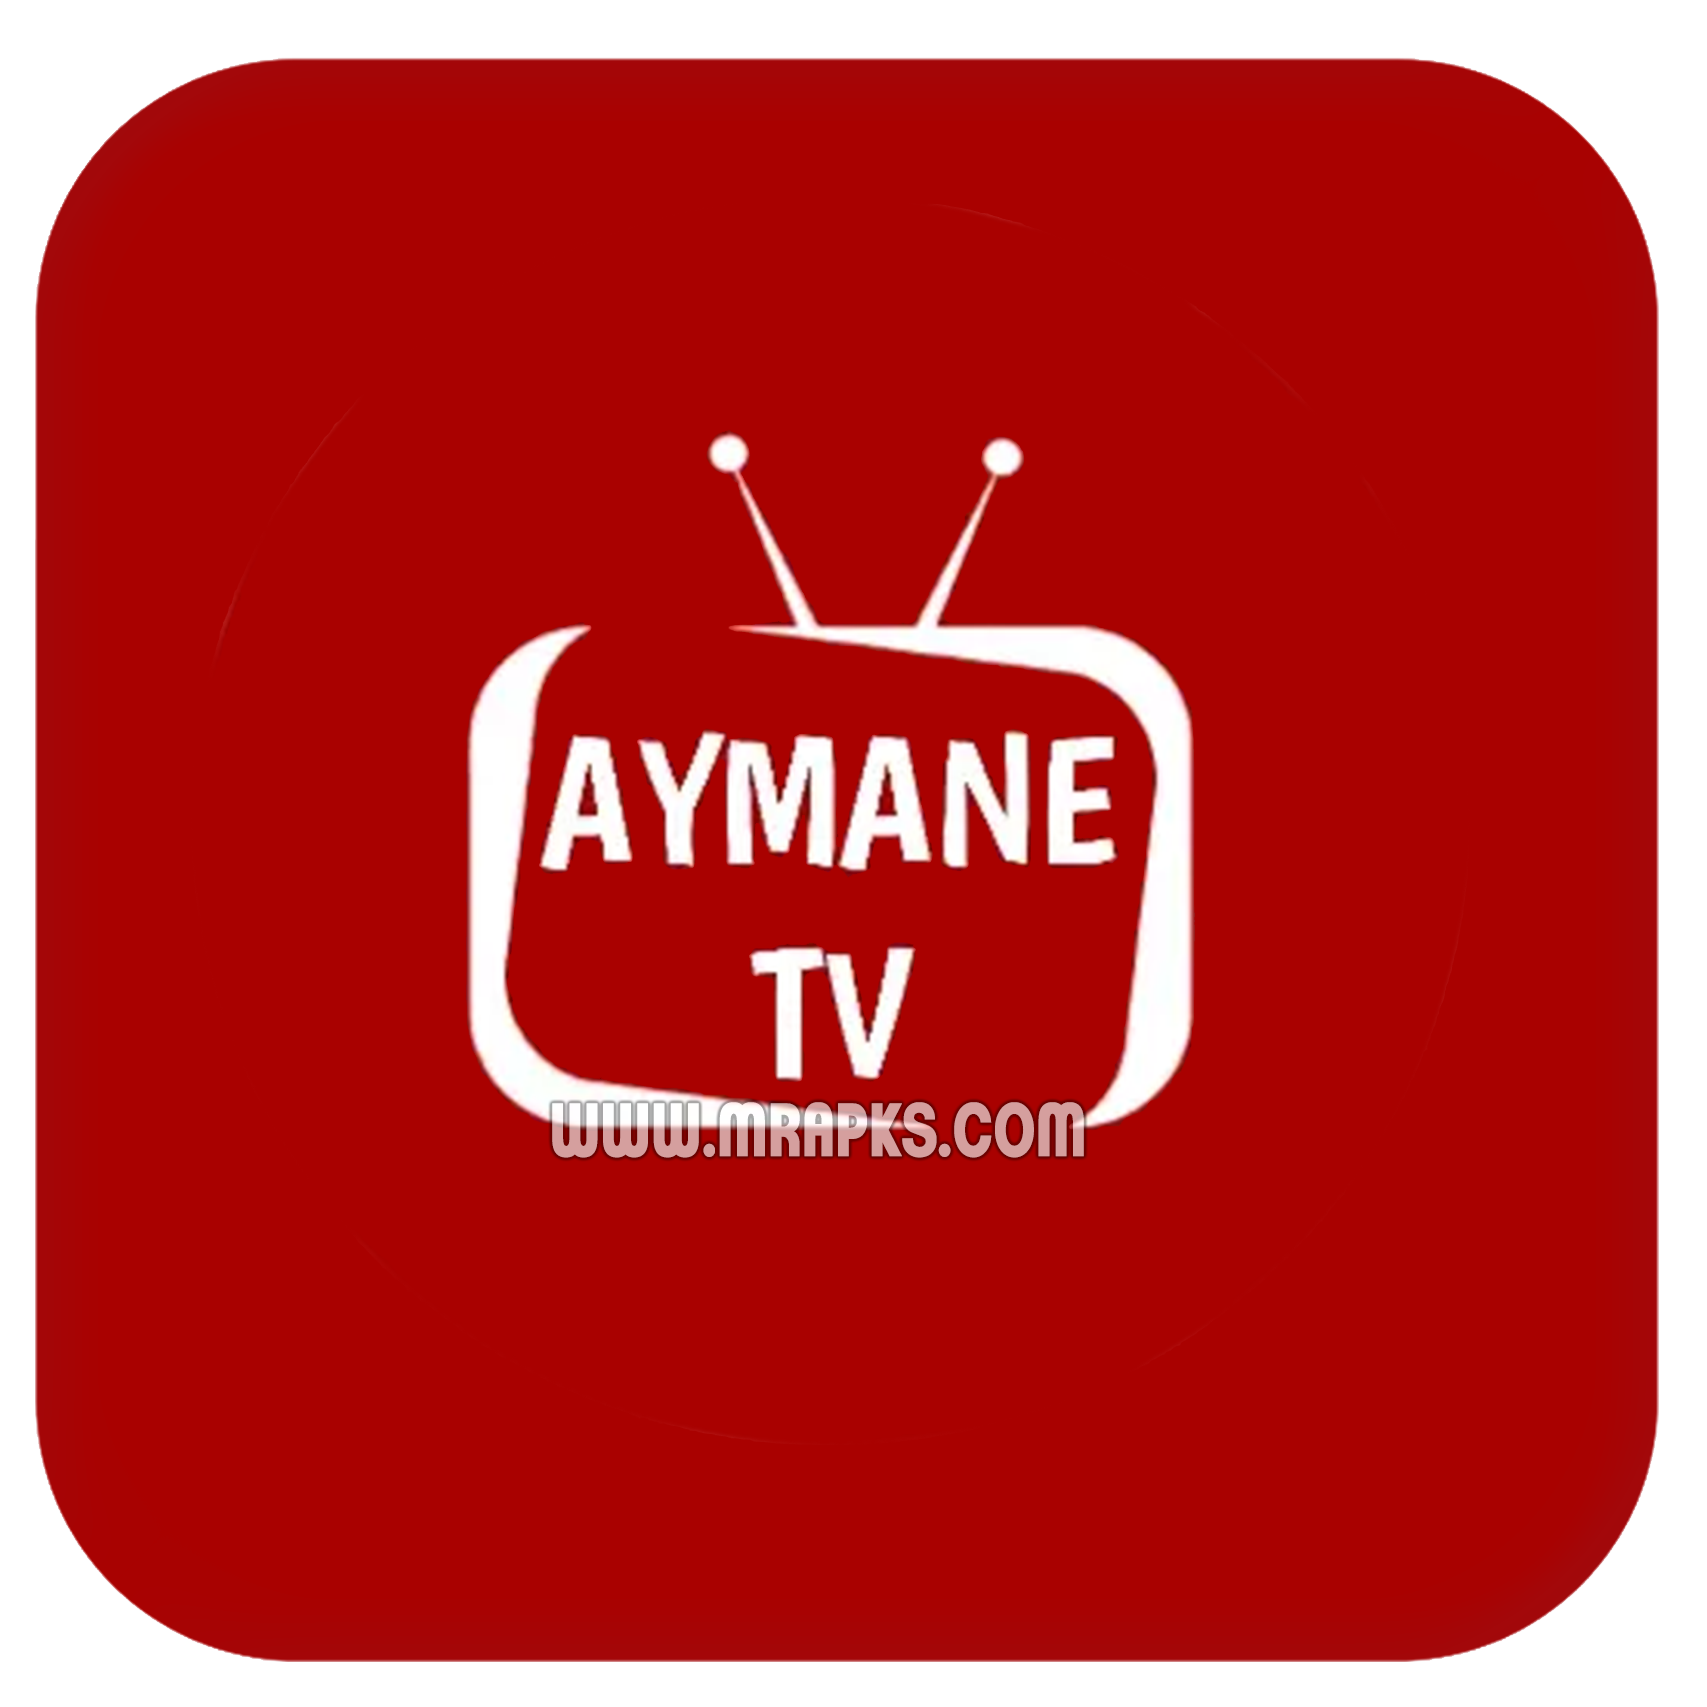 AYMAN TV v1.0 (Live TV App) Apk